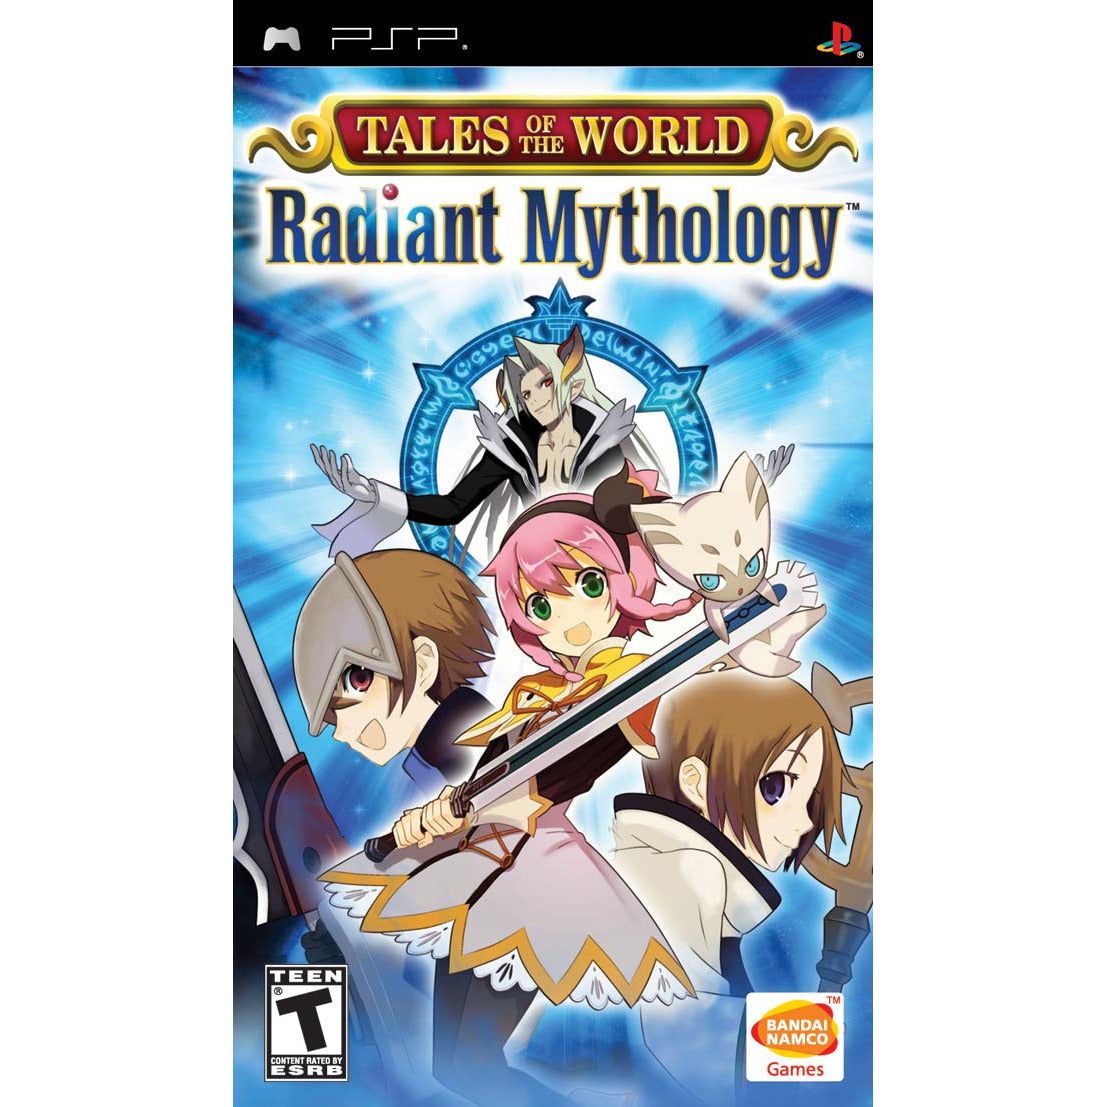 PSP - Tales of the World Radiant Mythology (Au cas où)